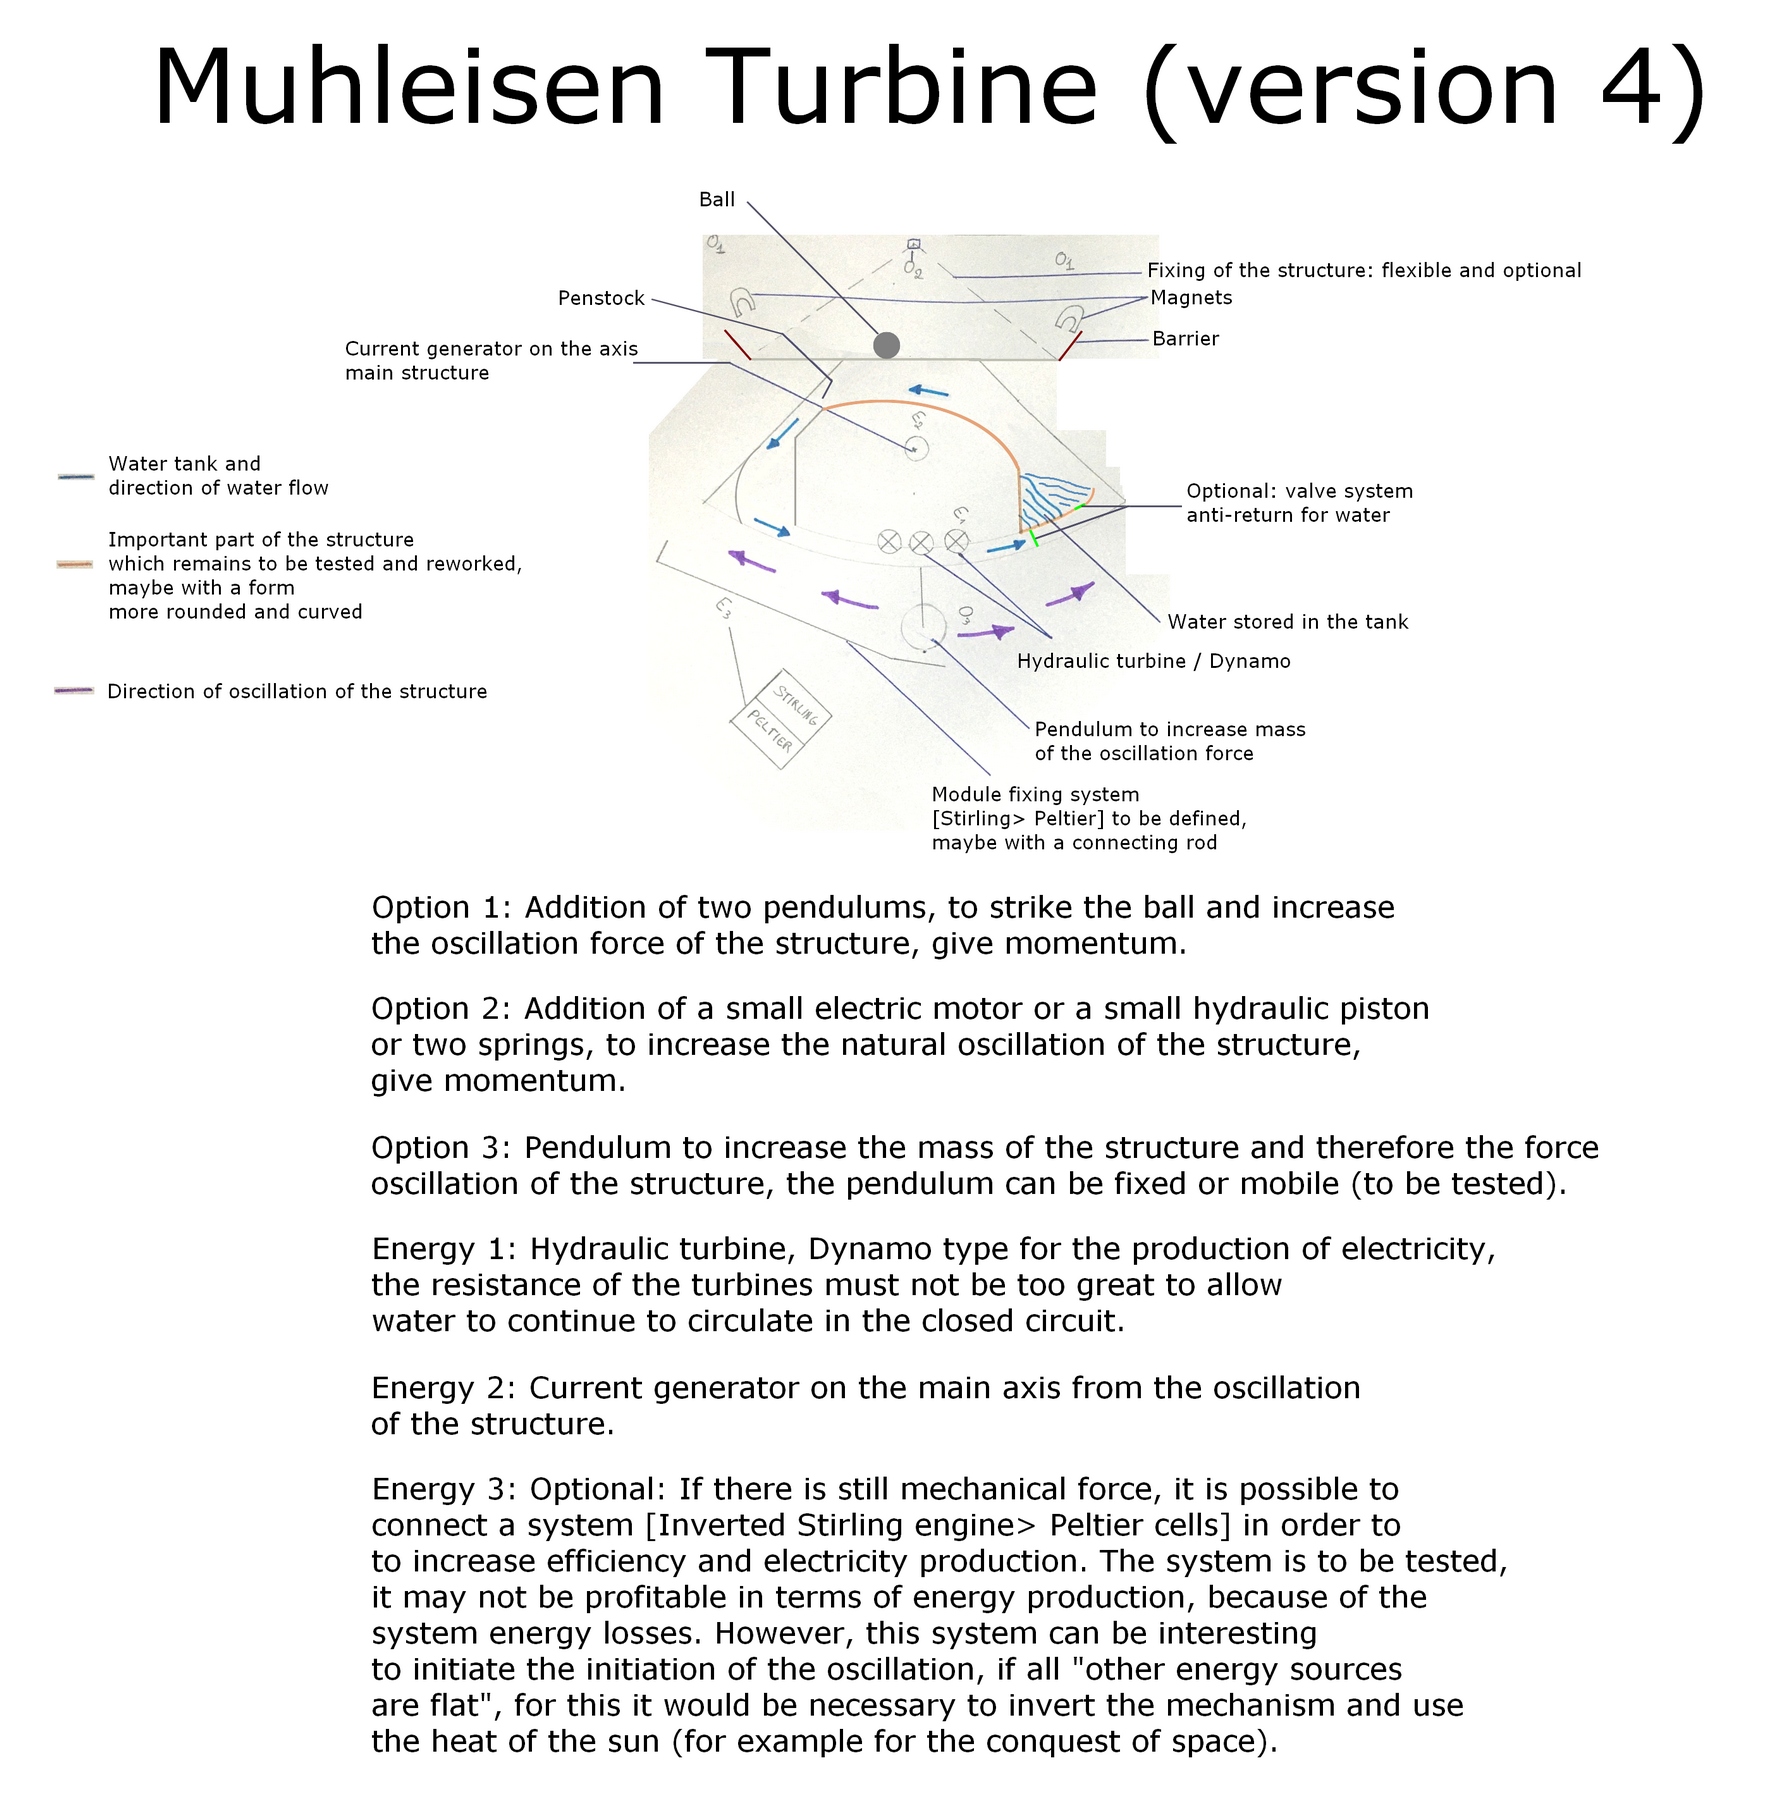 The Muhleisen Turbine fourth version